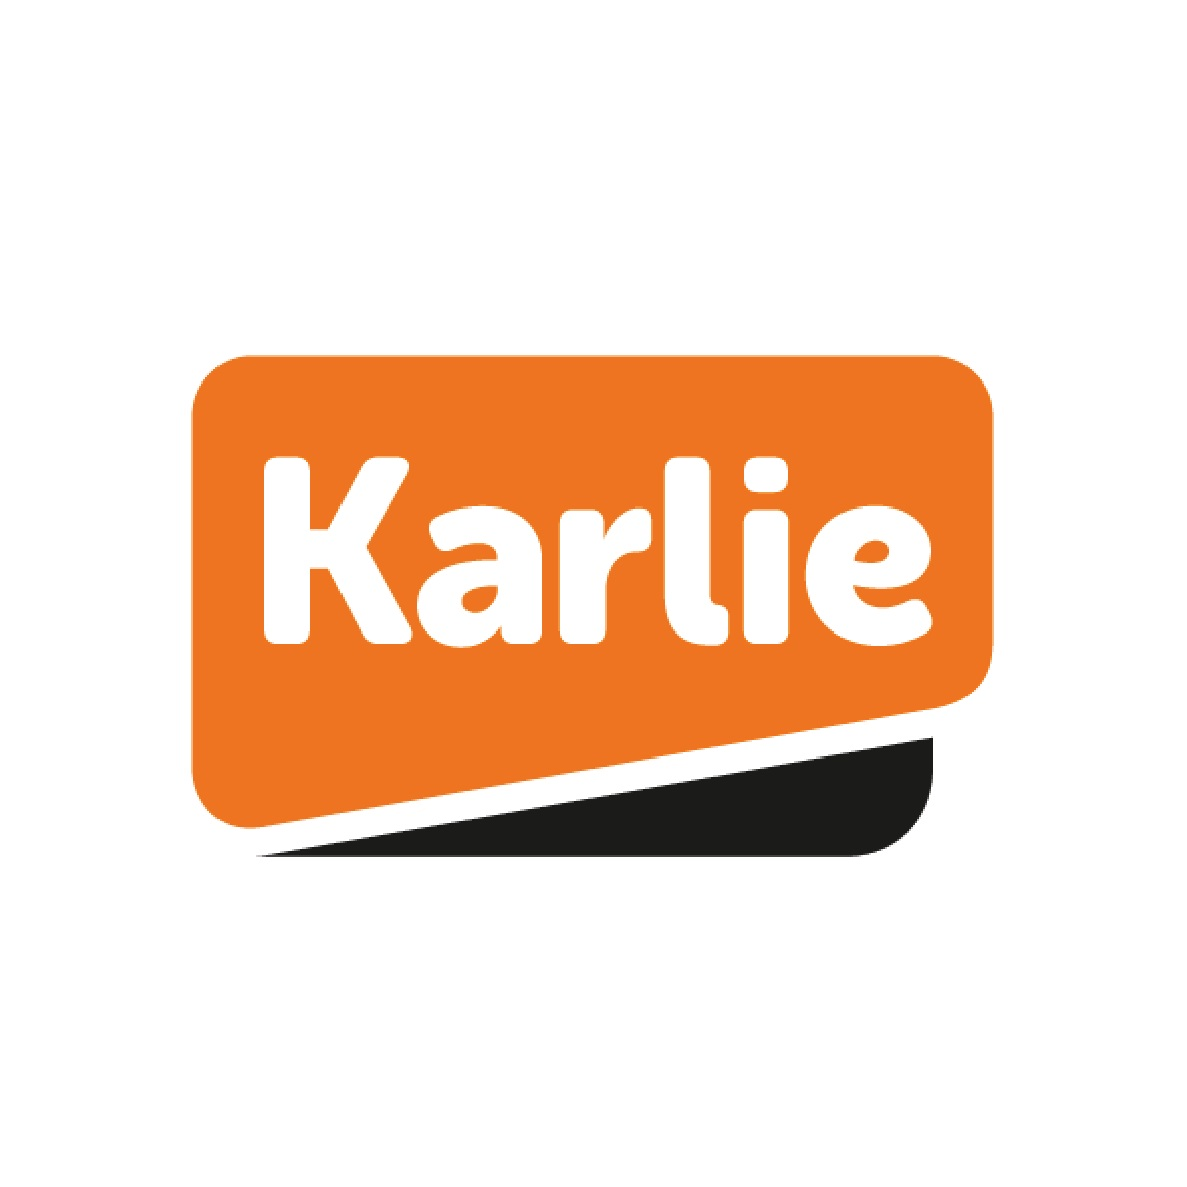 Karlie Flamingo GmbH